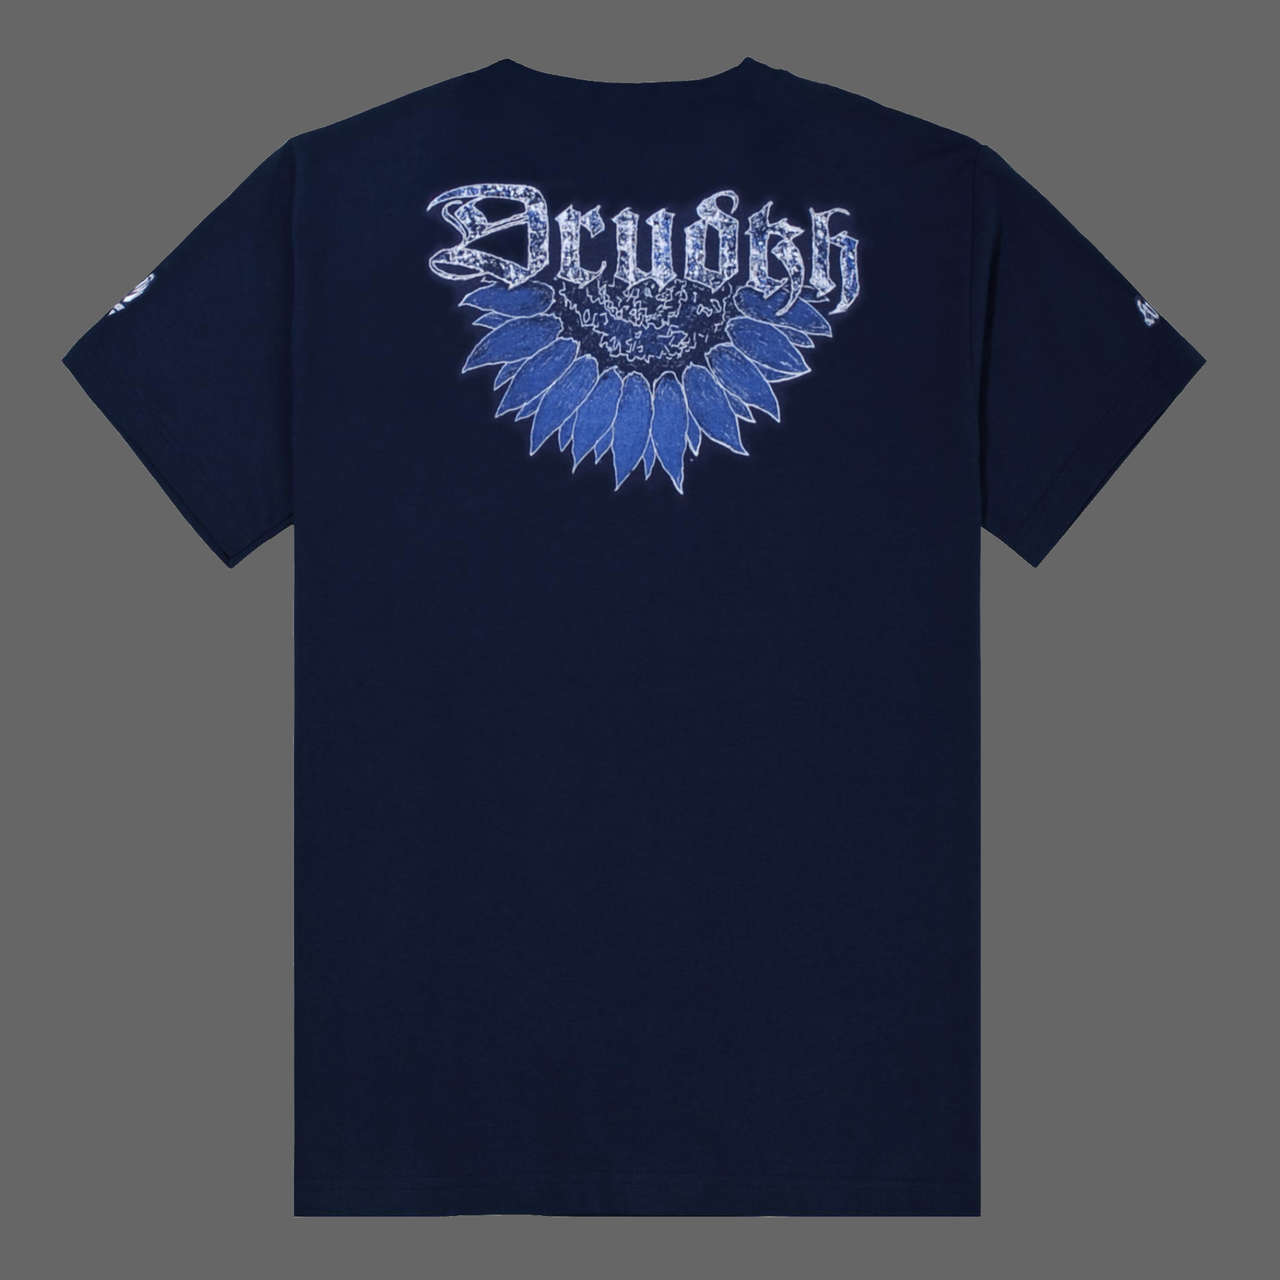 Drudkh - Eternal Turn of the Wheel (Вічний оберт колеса) (Navy) (T-Shirt)